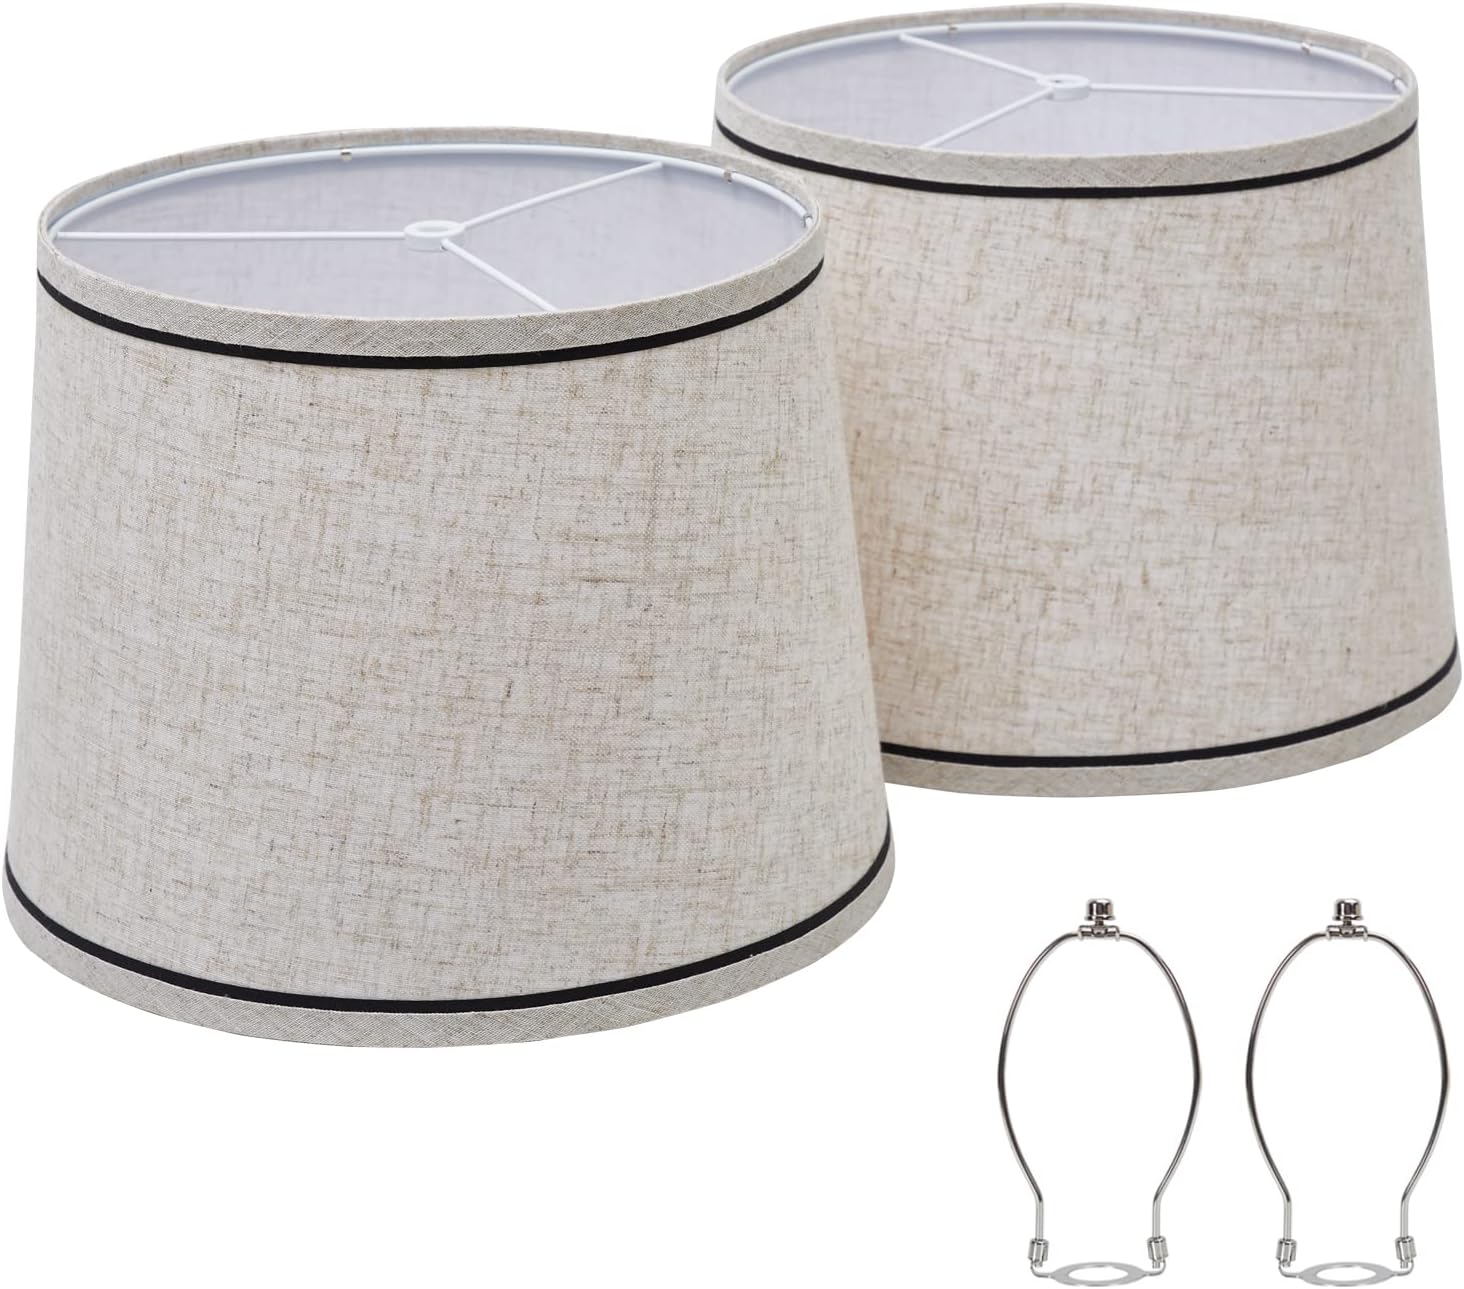 Luvkczc Drum Lampshades Set of 2, Fabric Lampshades for Table Lamps Floor Lamps, Medium Lampshades 13" Top x 11" Bottom x 10